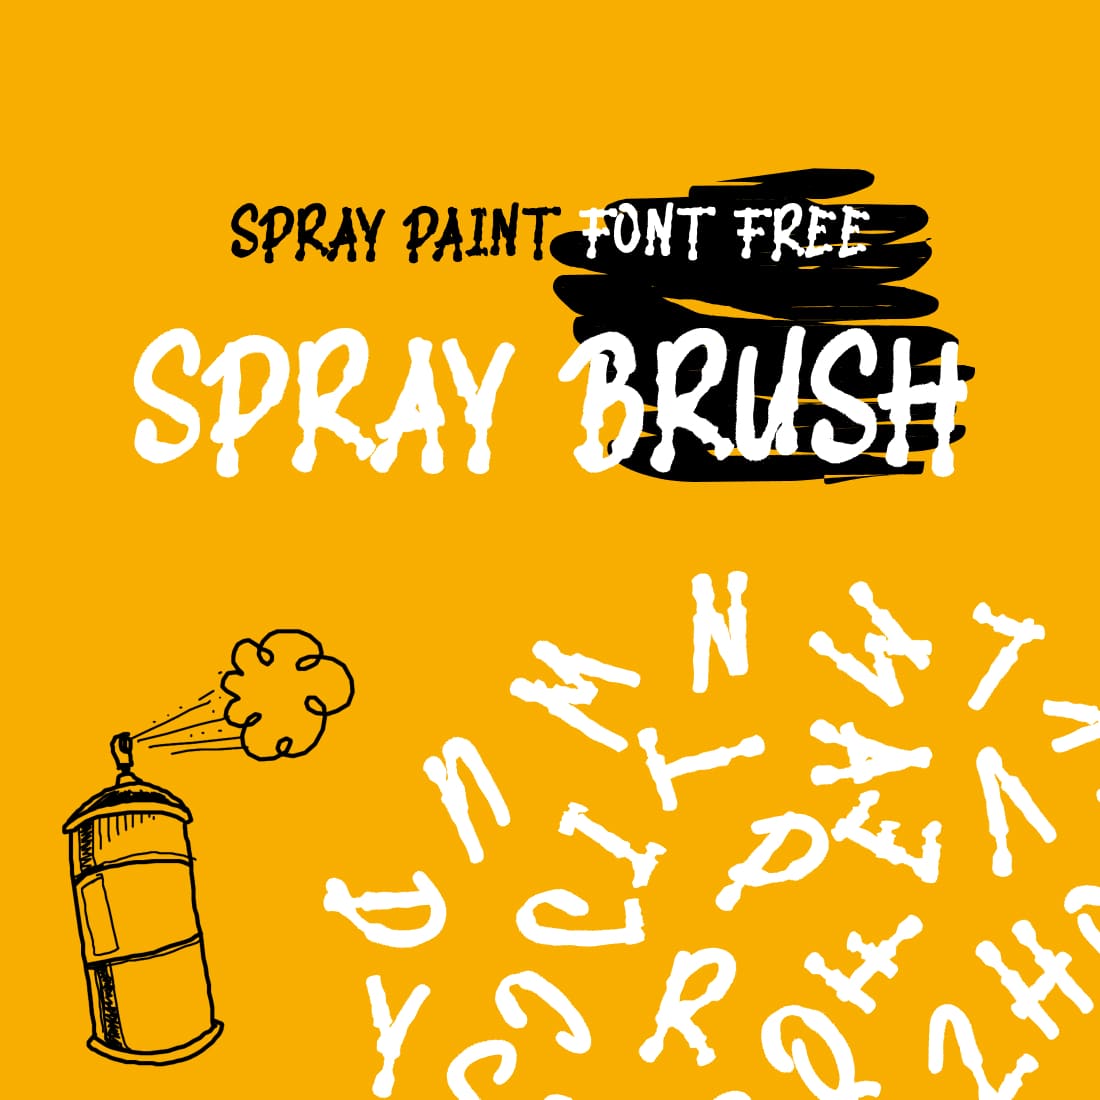 Spray Brush - spray paint font free Cover image by MasterBundles.